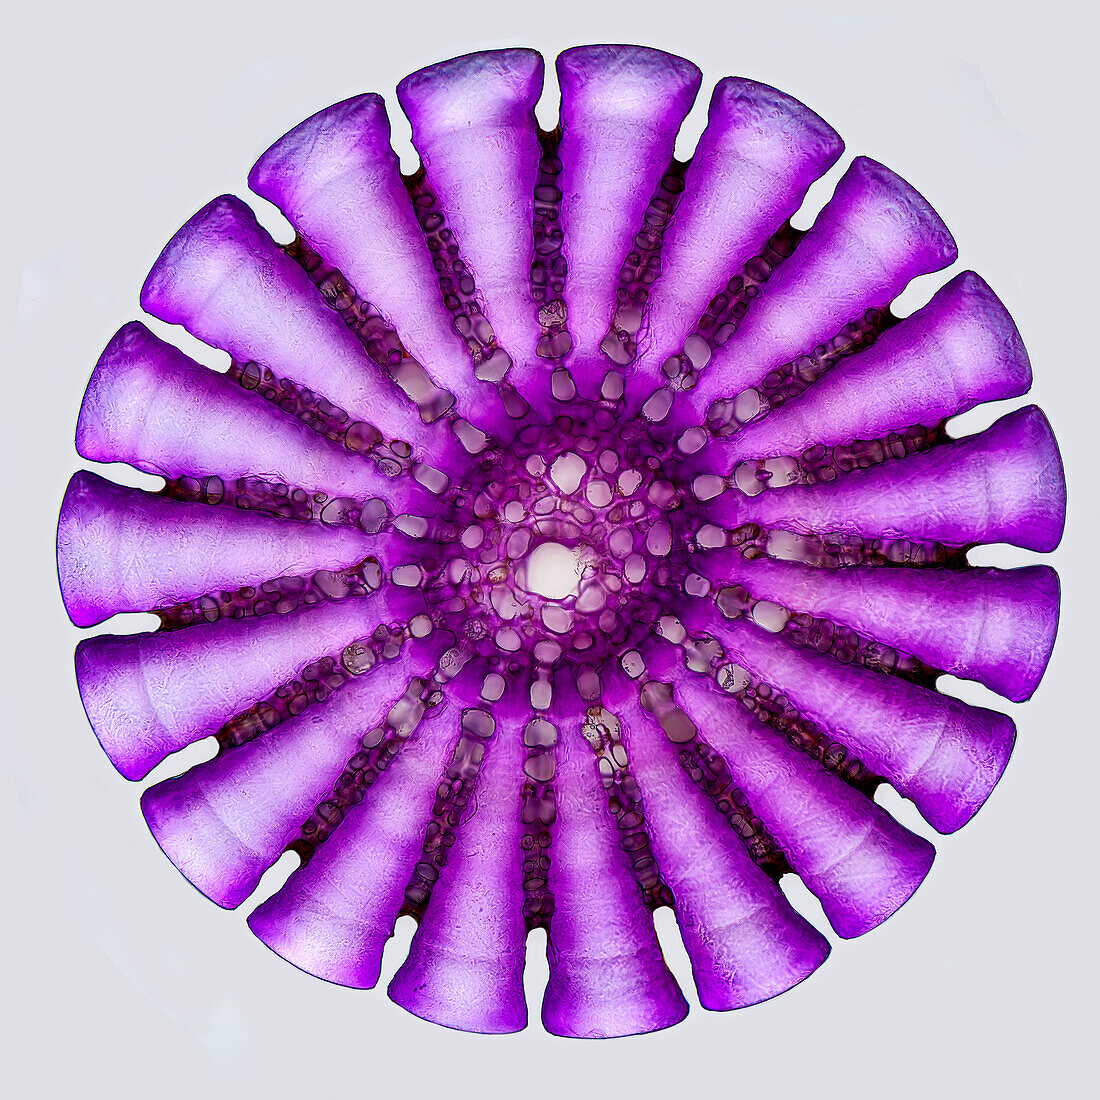 Sea urchin spine, light micrograph